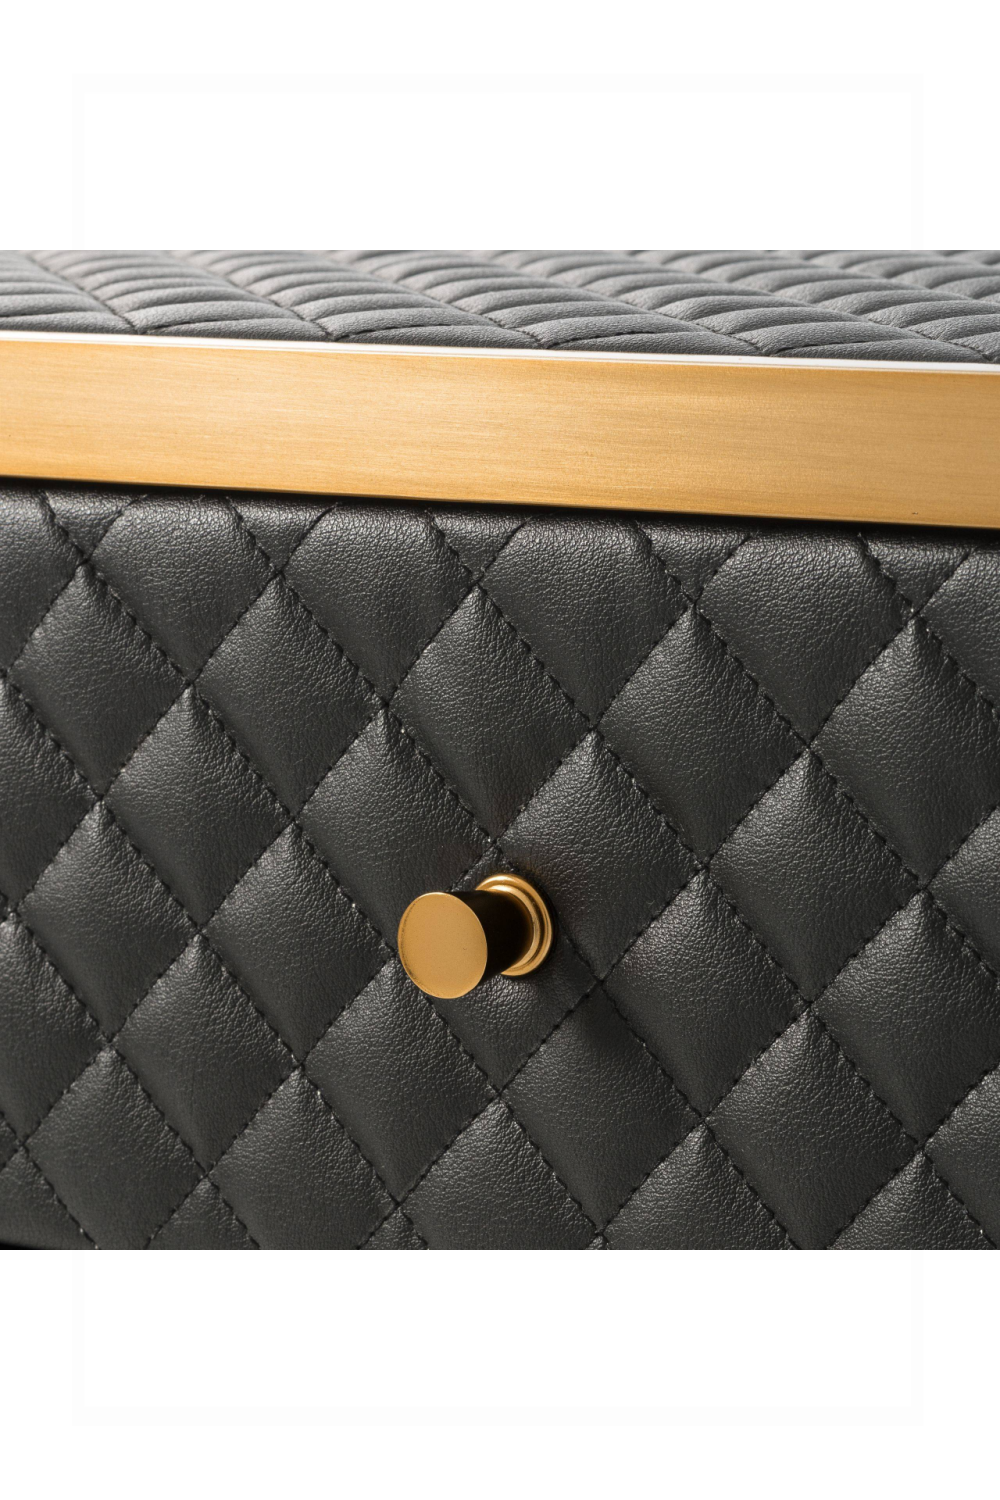 Black Leather Side Table | Eichholtz Monfort | OROA.com